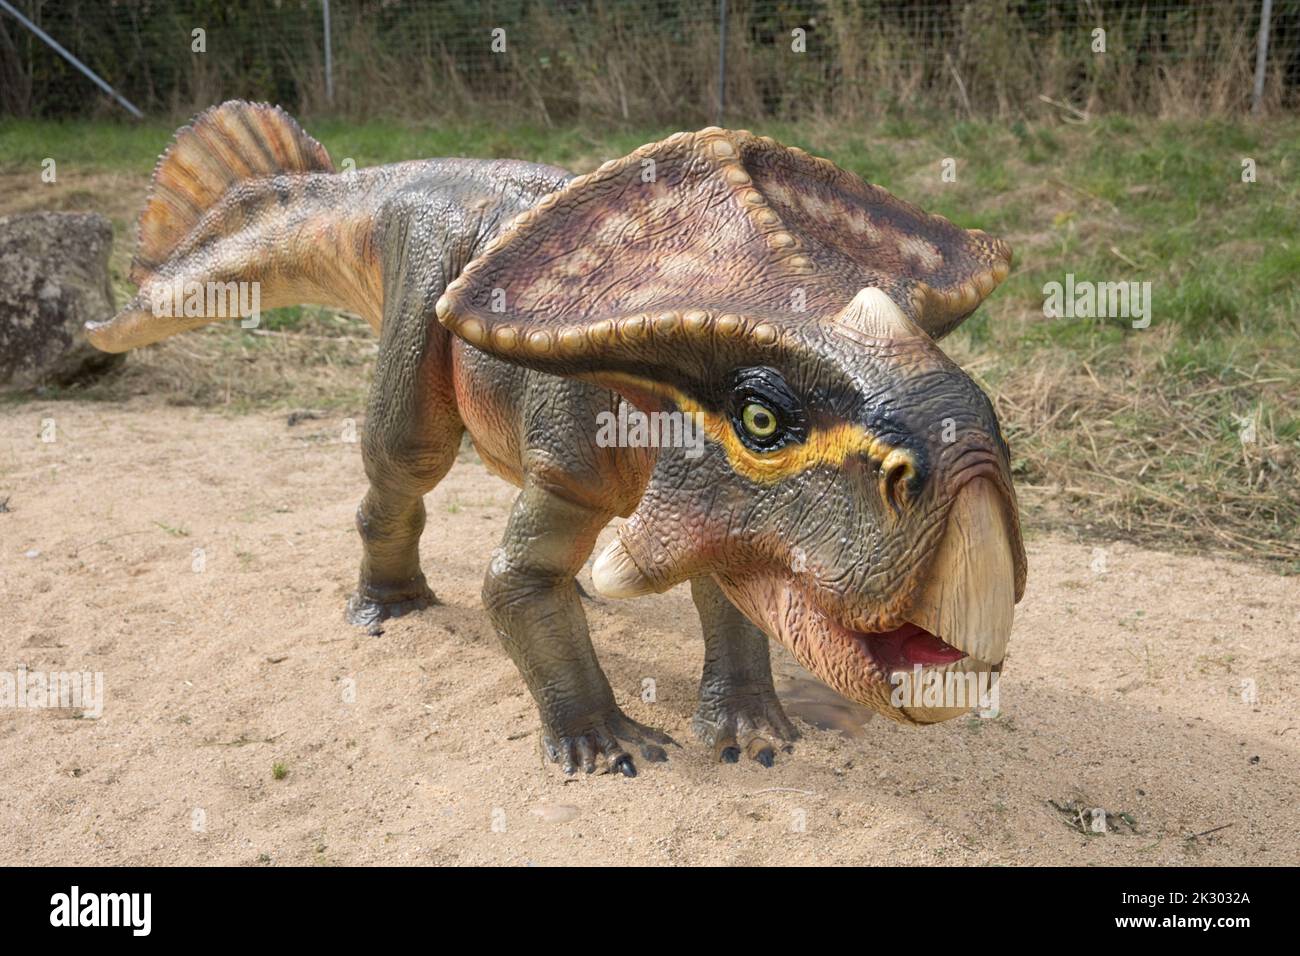 Lebensgroßes Modell des ausgestorbenen Dinosauriers Protoceratops in All Things Wild, Honeybourne, Großbritannien Stockfoto